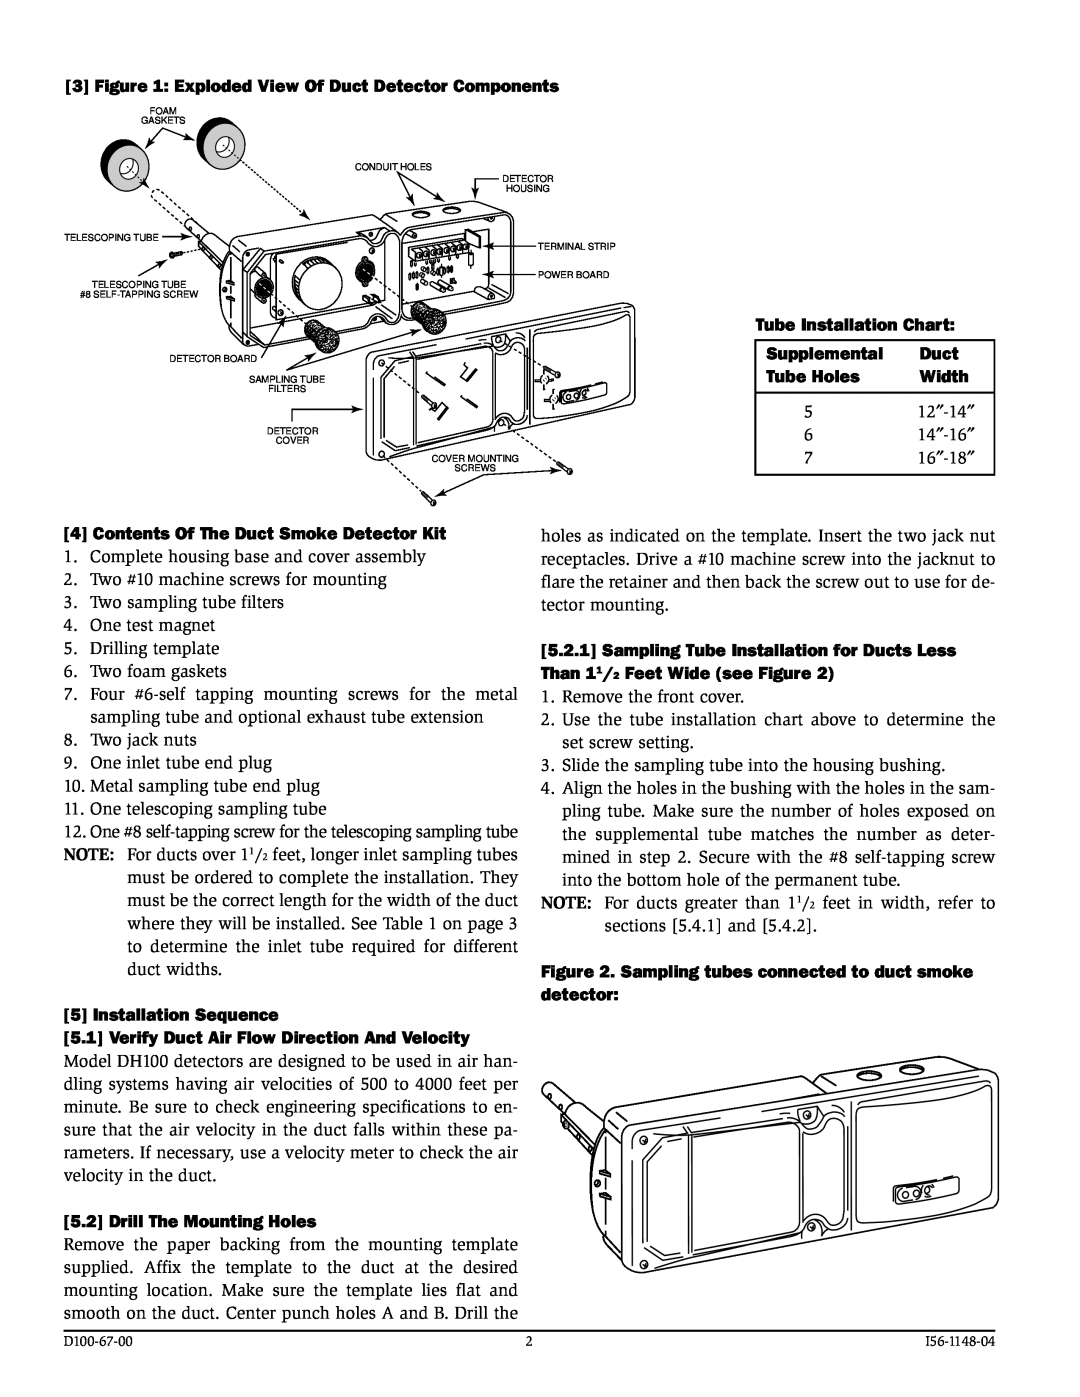 System Sensor I56-1148-04, D100-67-00 specifications Tube Installation Chart 